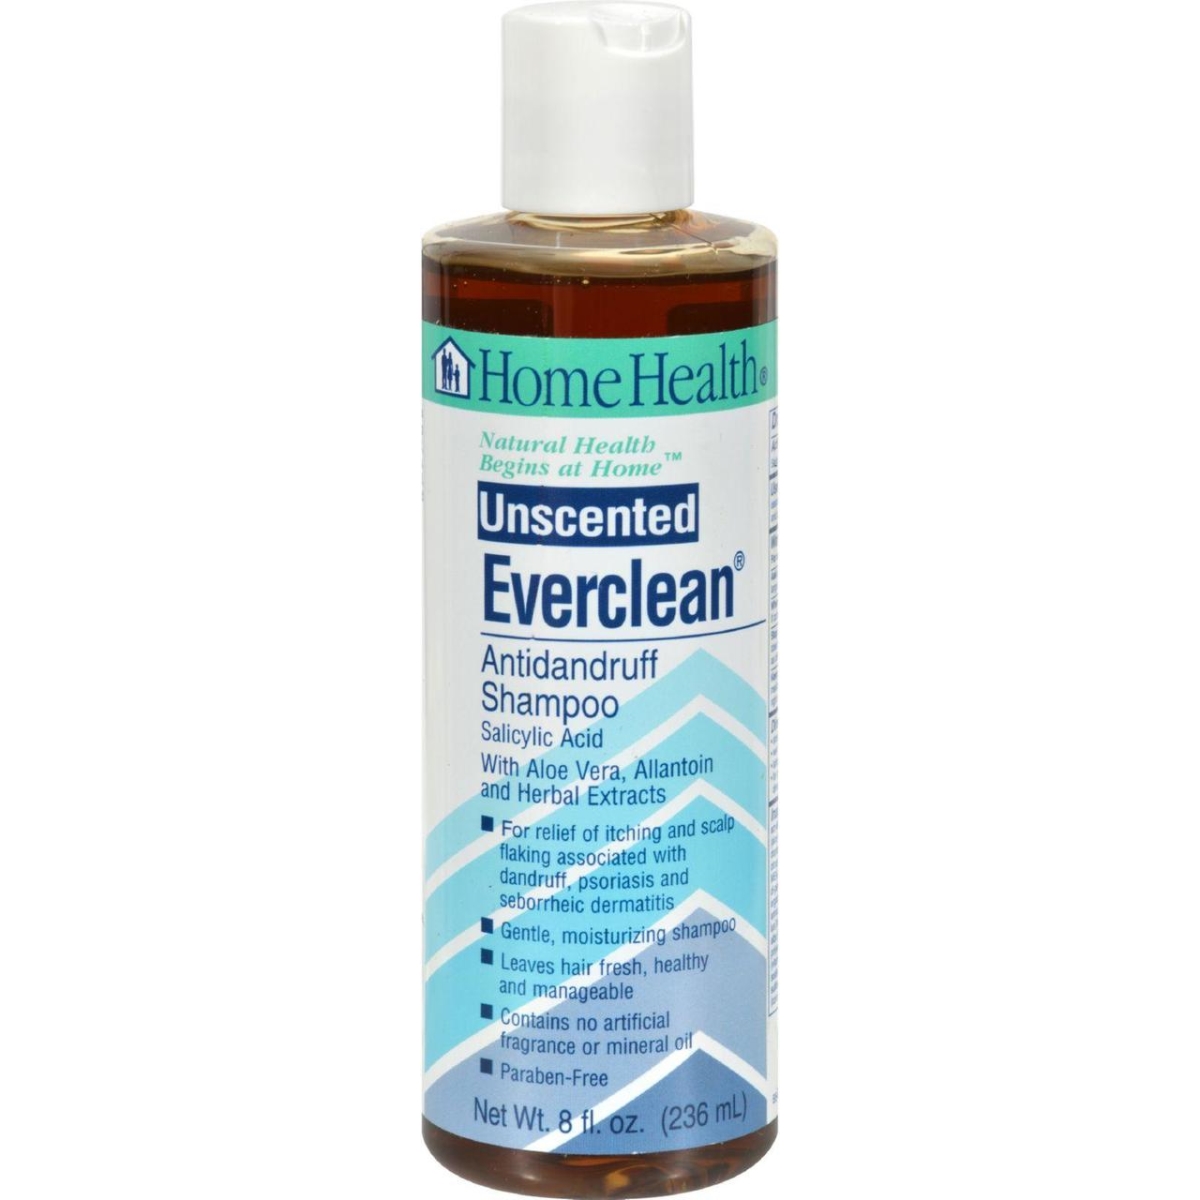 Hg0486860 8 Fl Oz Everclean Antidandruff Shampoo Unscented